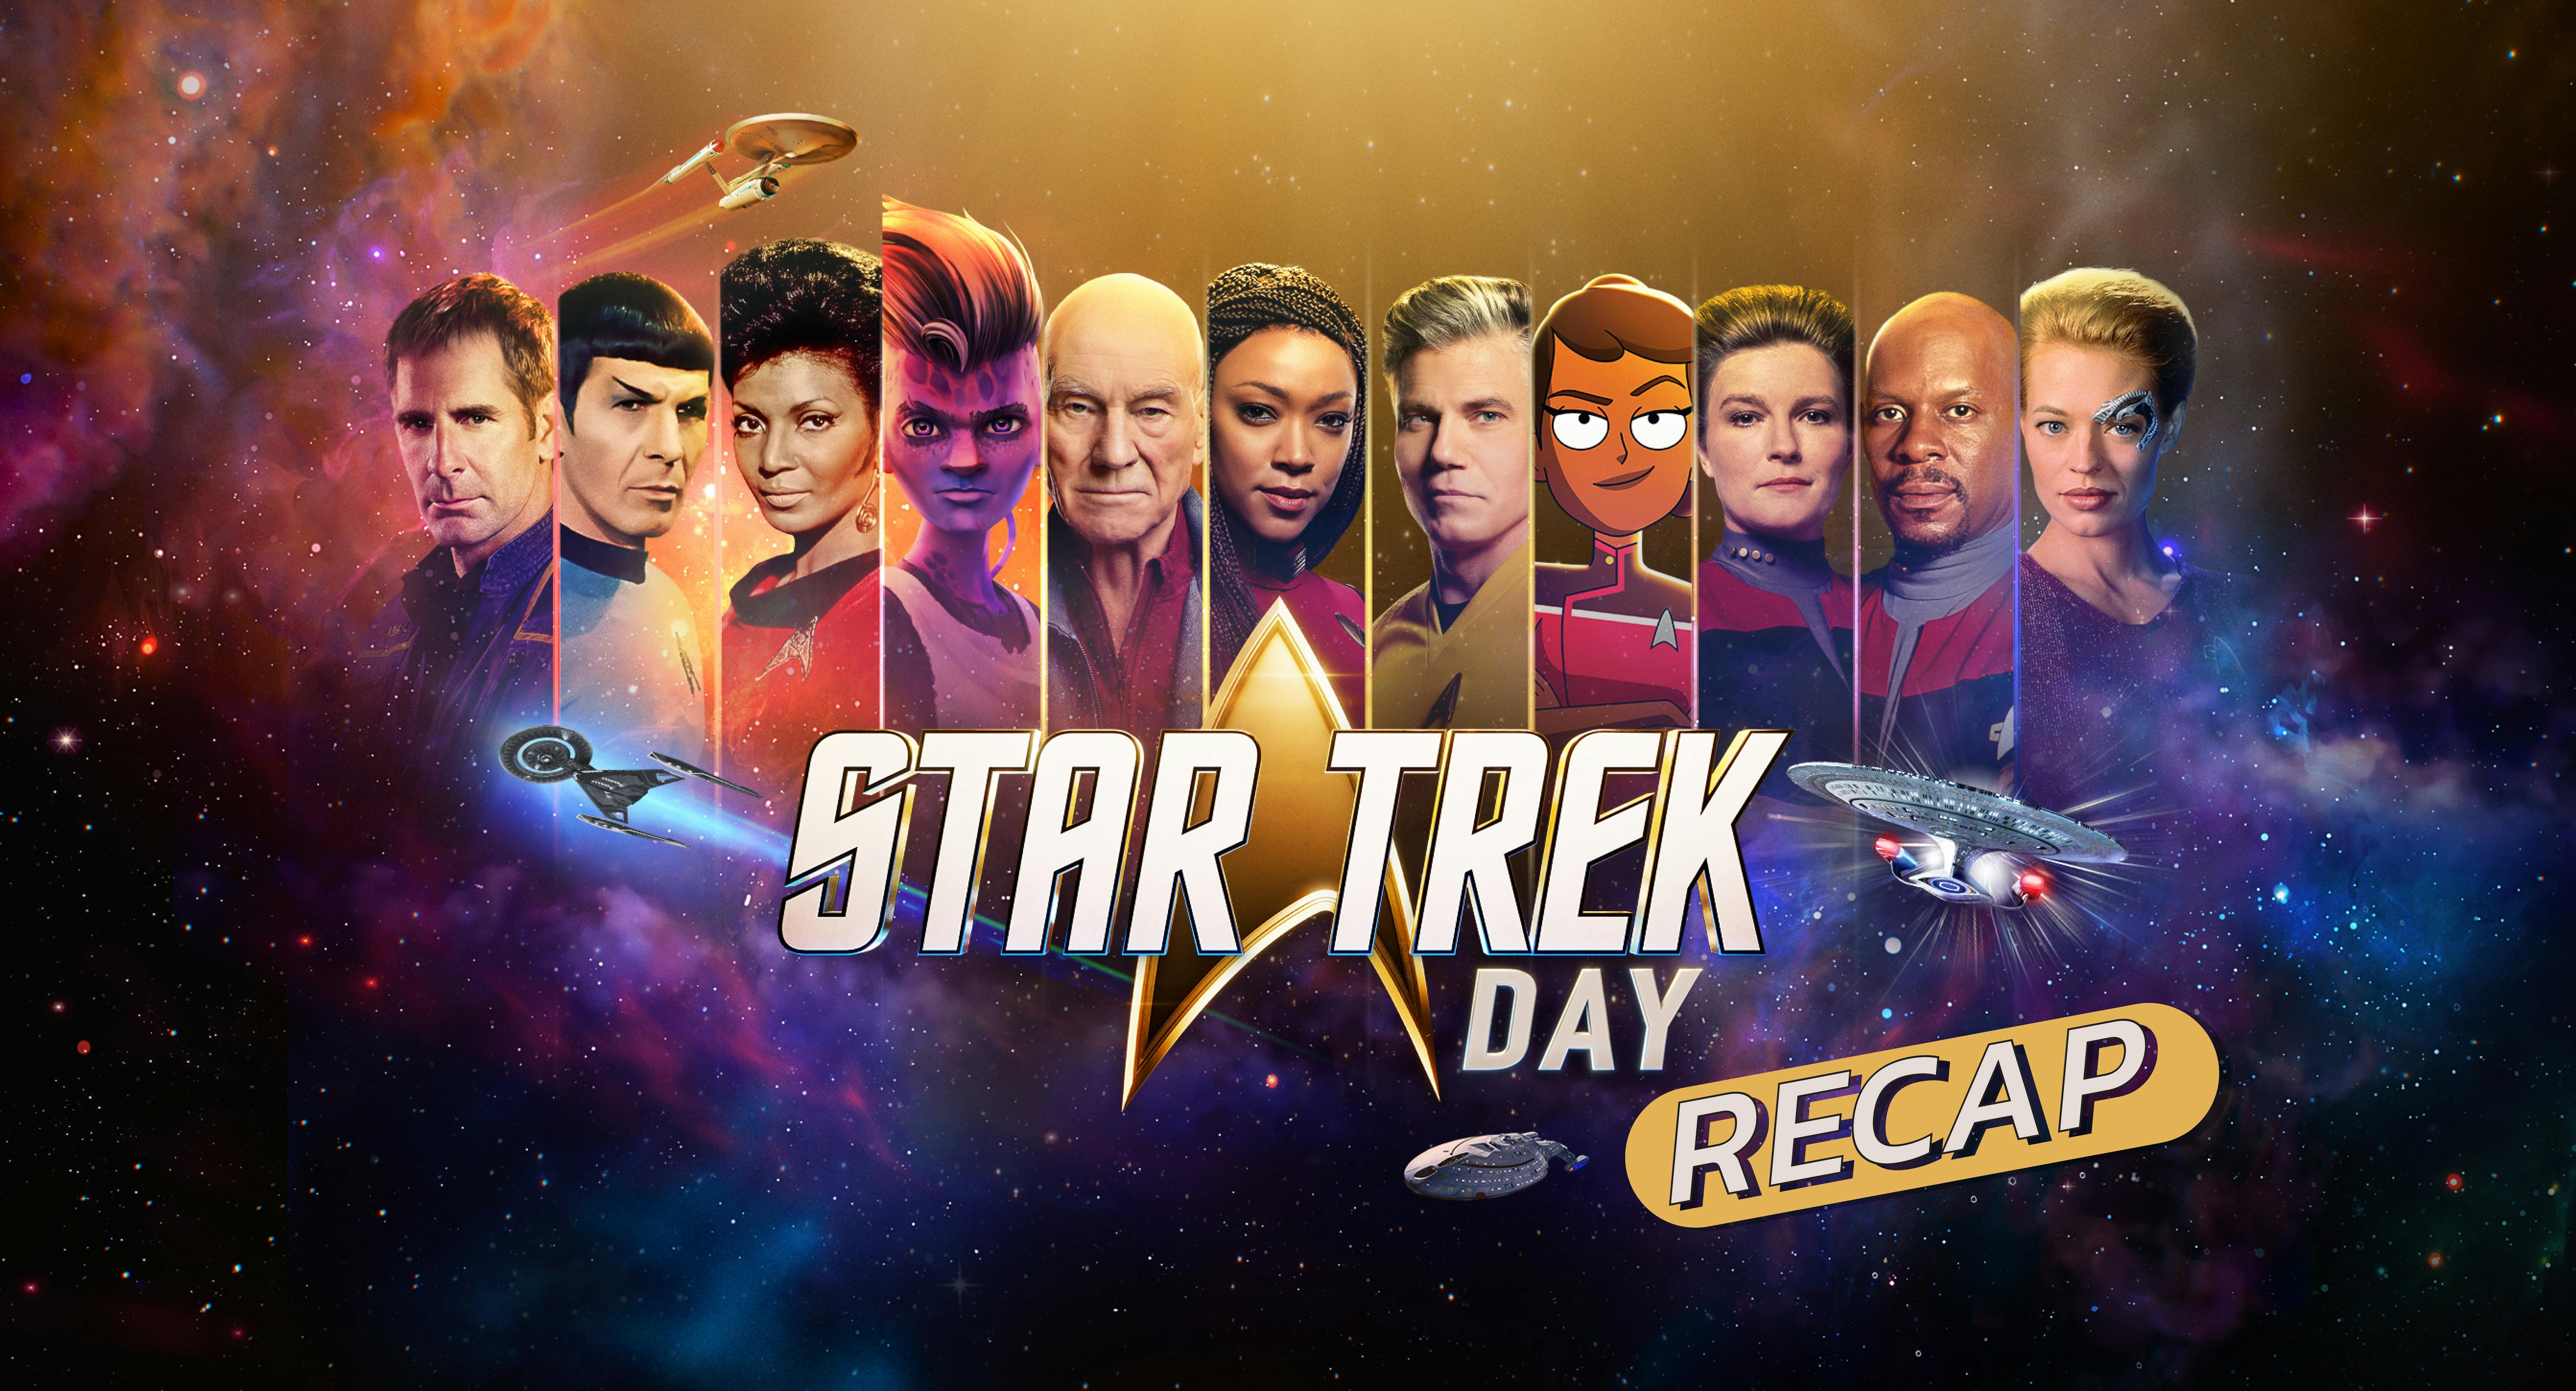 Star Trek Day 2022 Banner - The Recap Edition